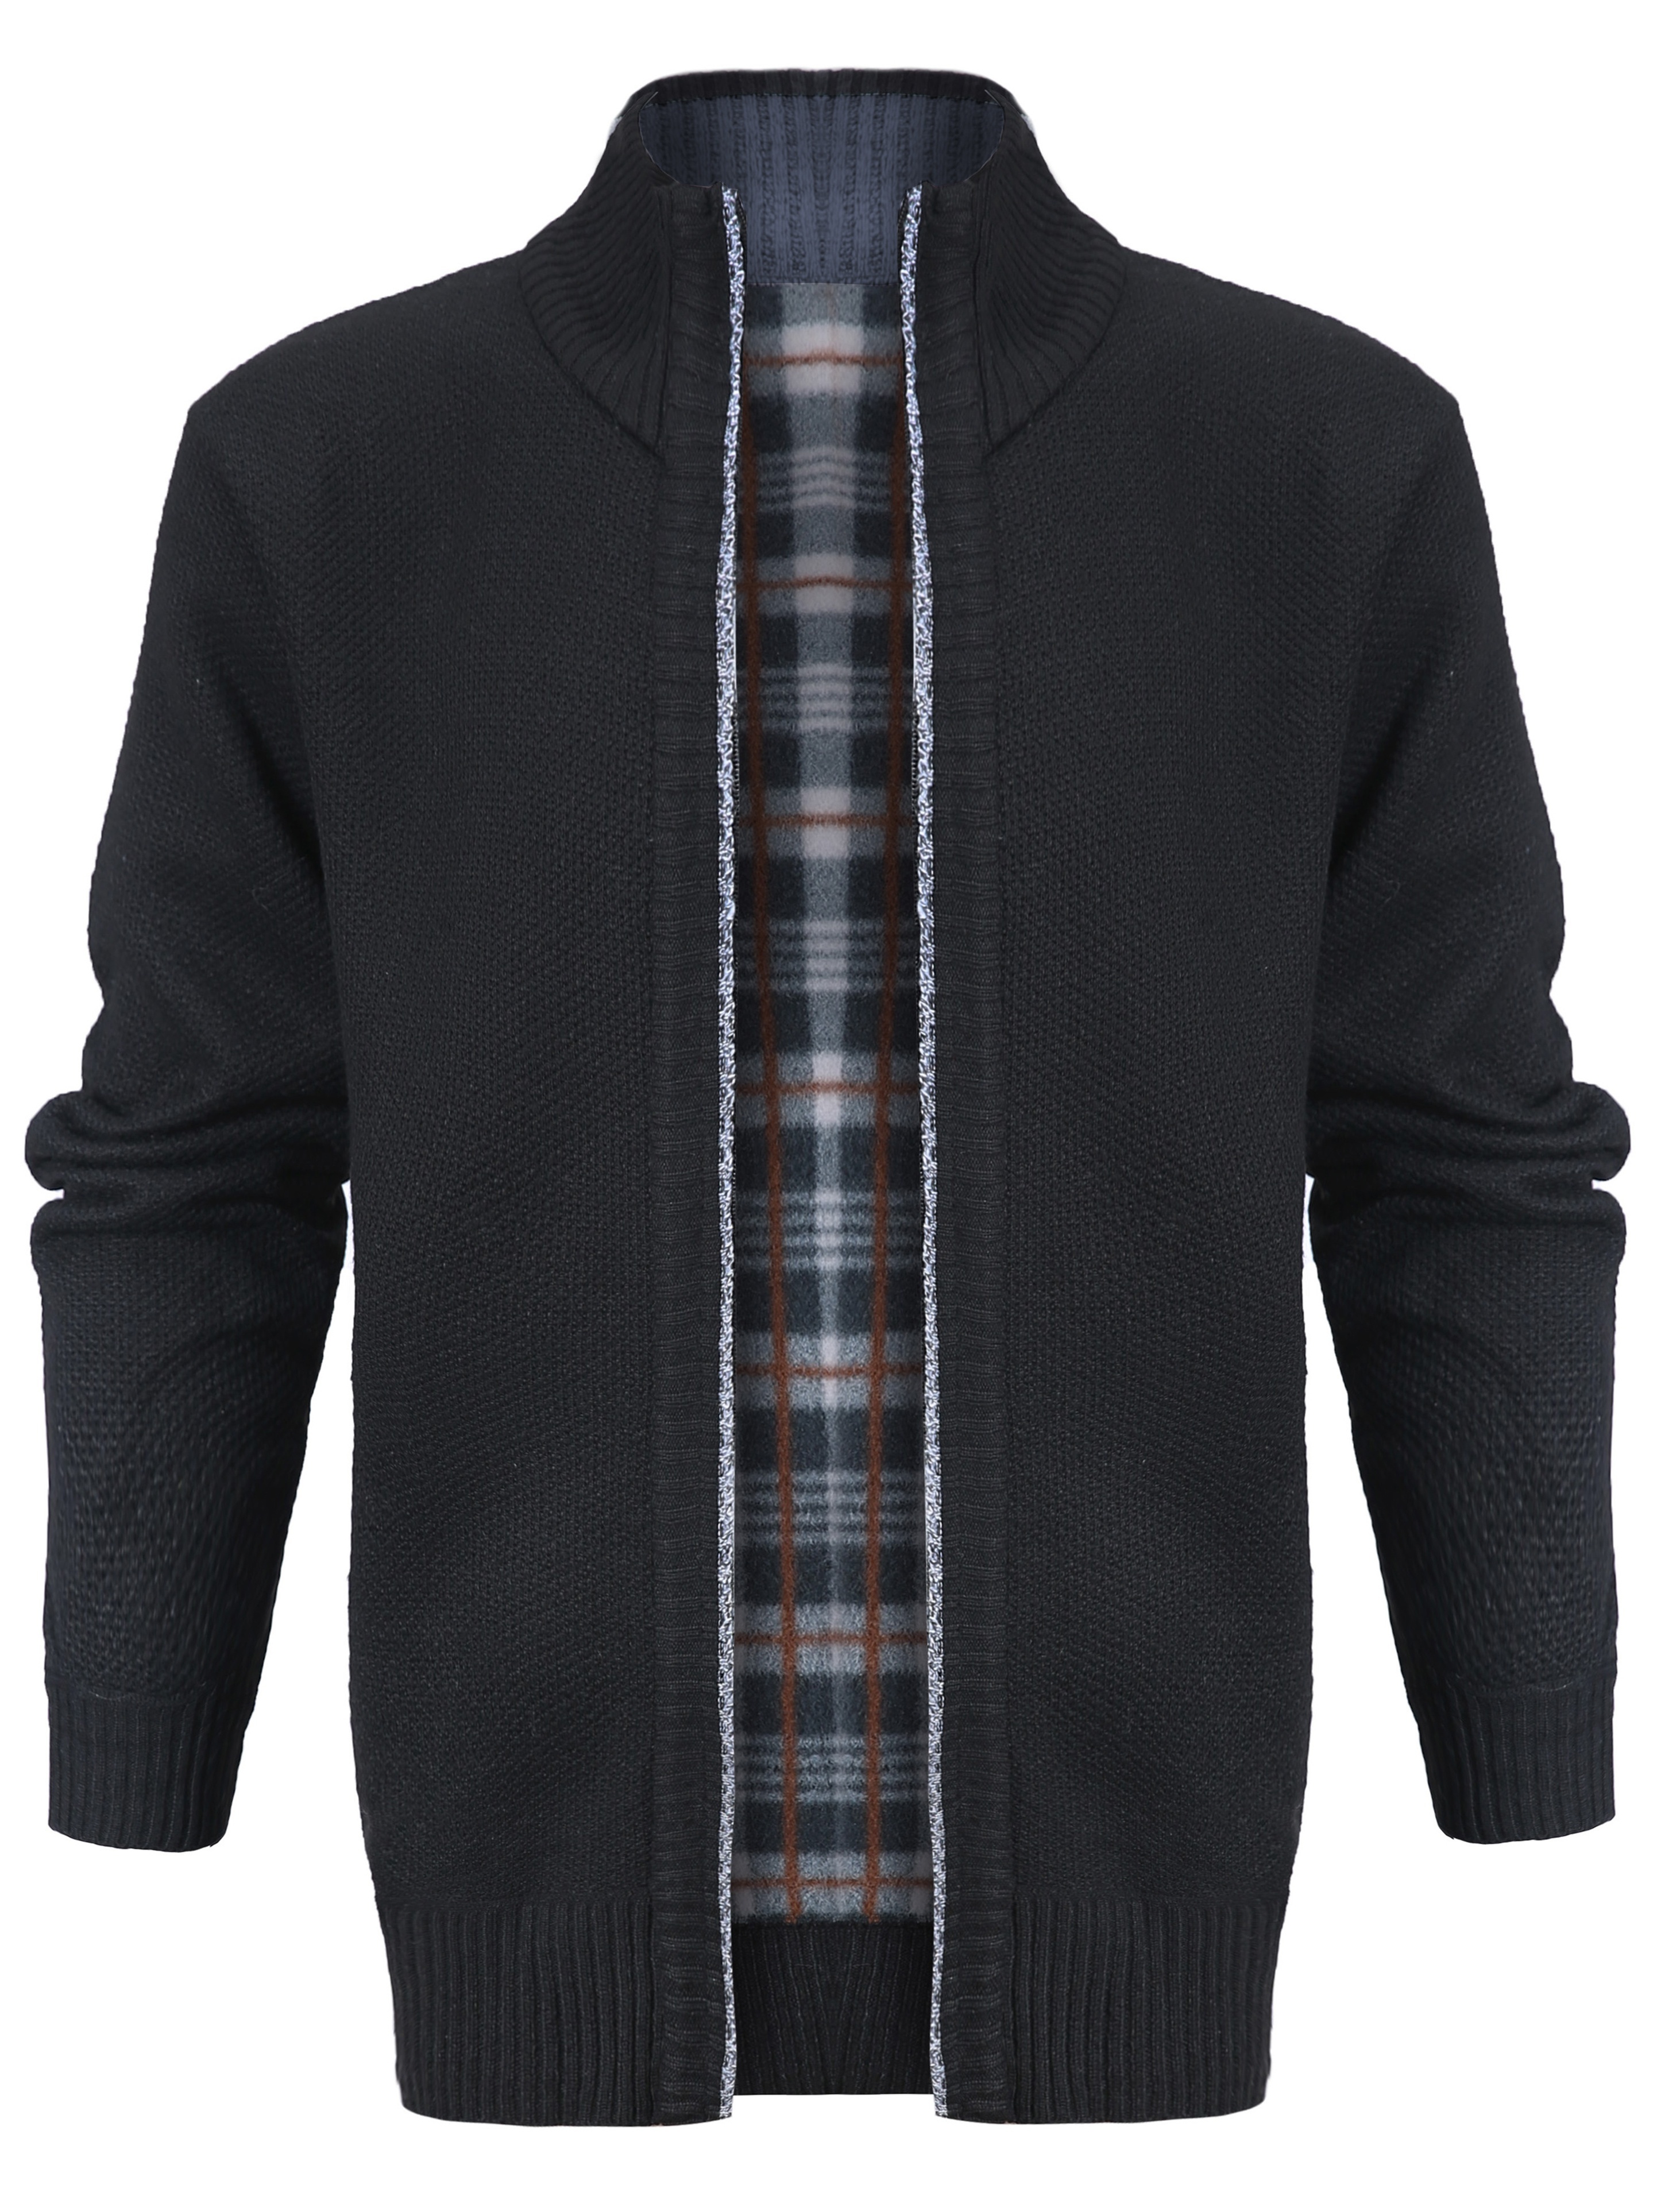 Men's lapel sweater jacket winter knitted color block cardigan jacket  jacket NEW